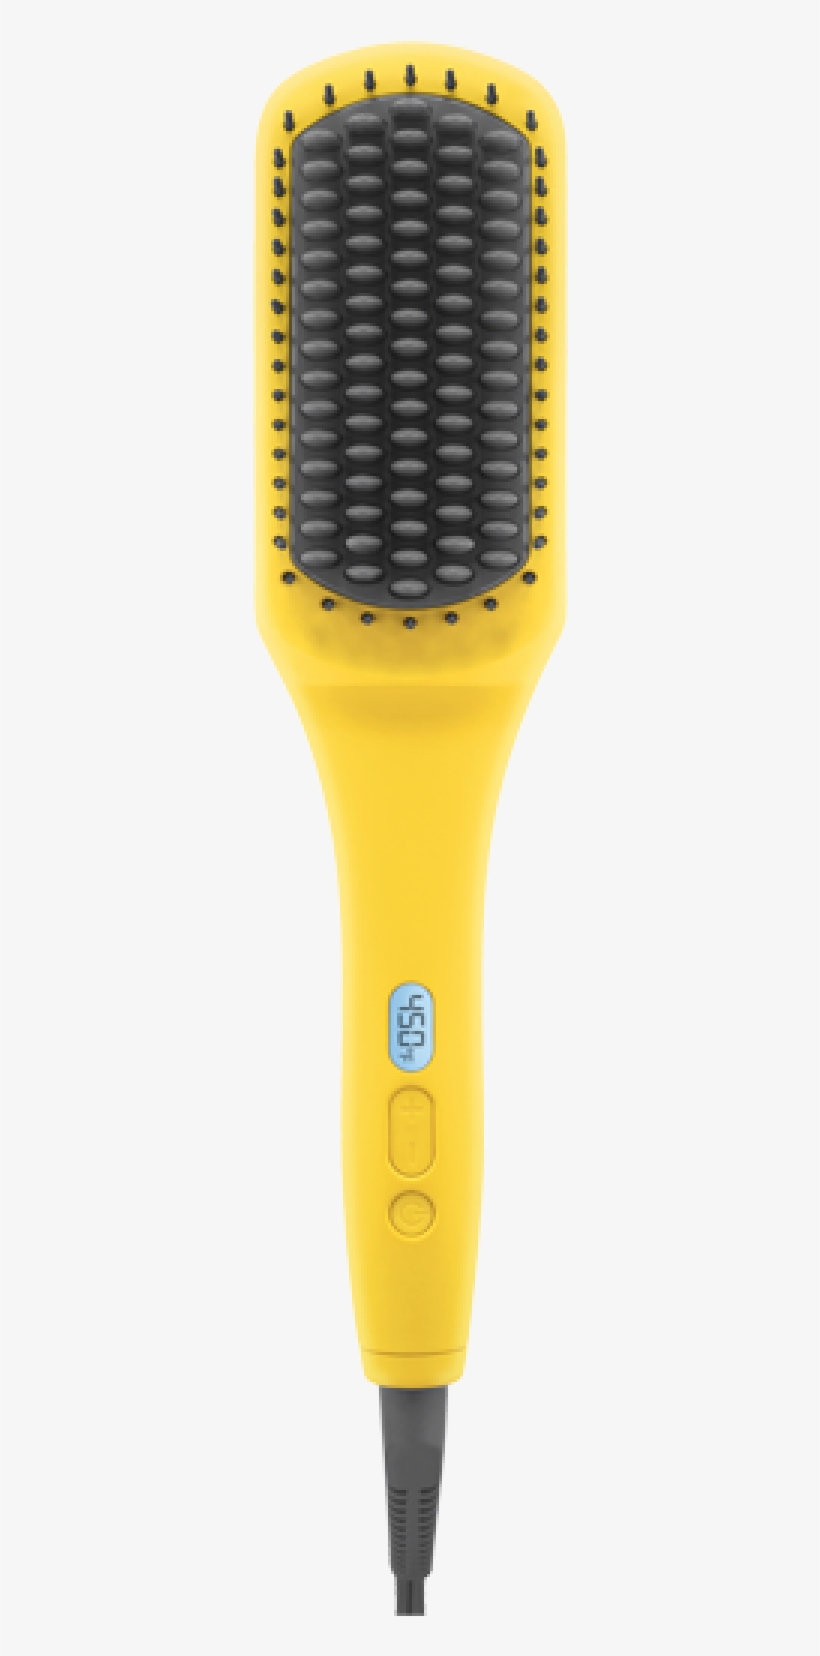 Heated Straightening Brush For Hair - Drybar The Brush Crush Heated Straightening Brush, transparent png #8508045